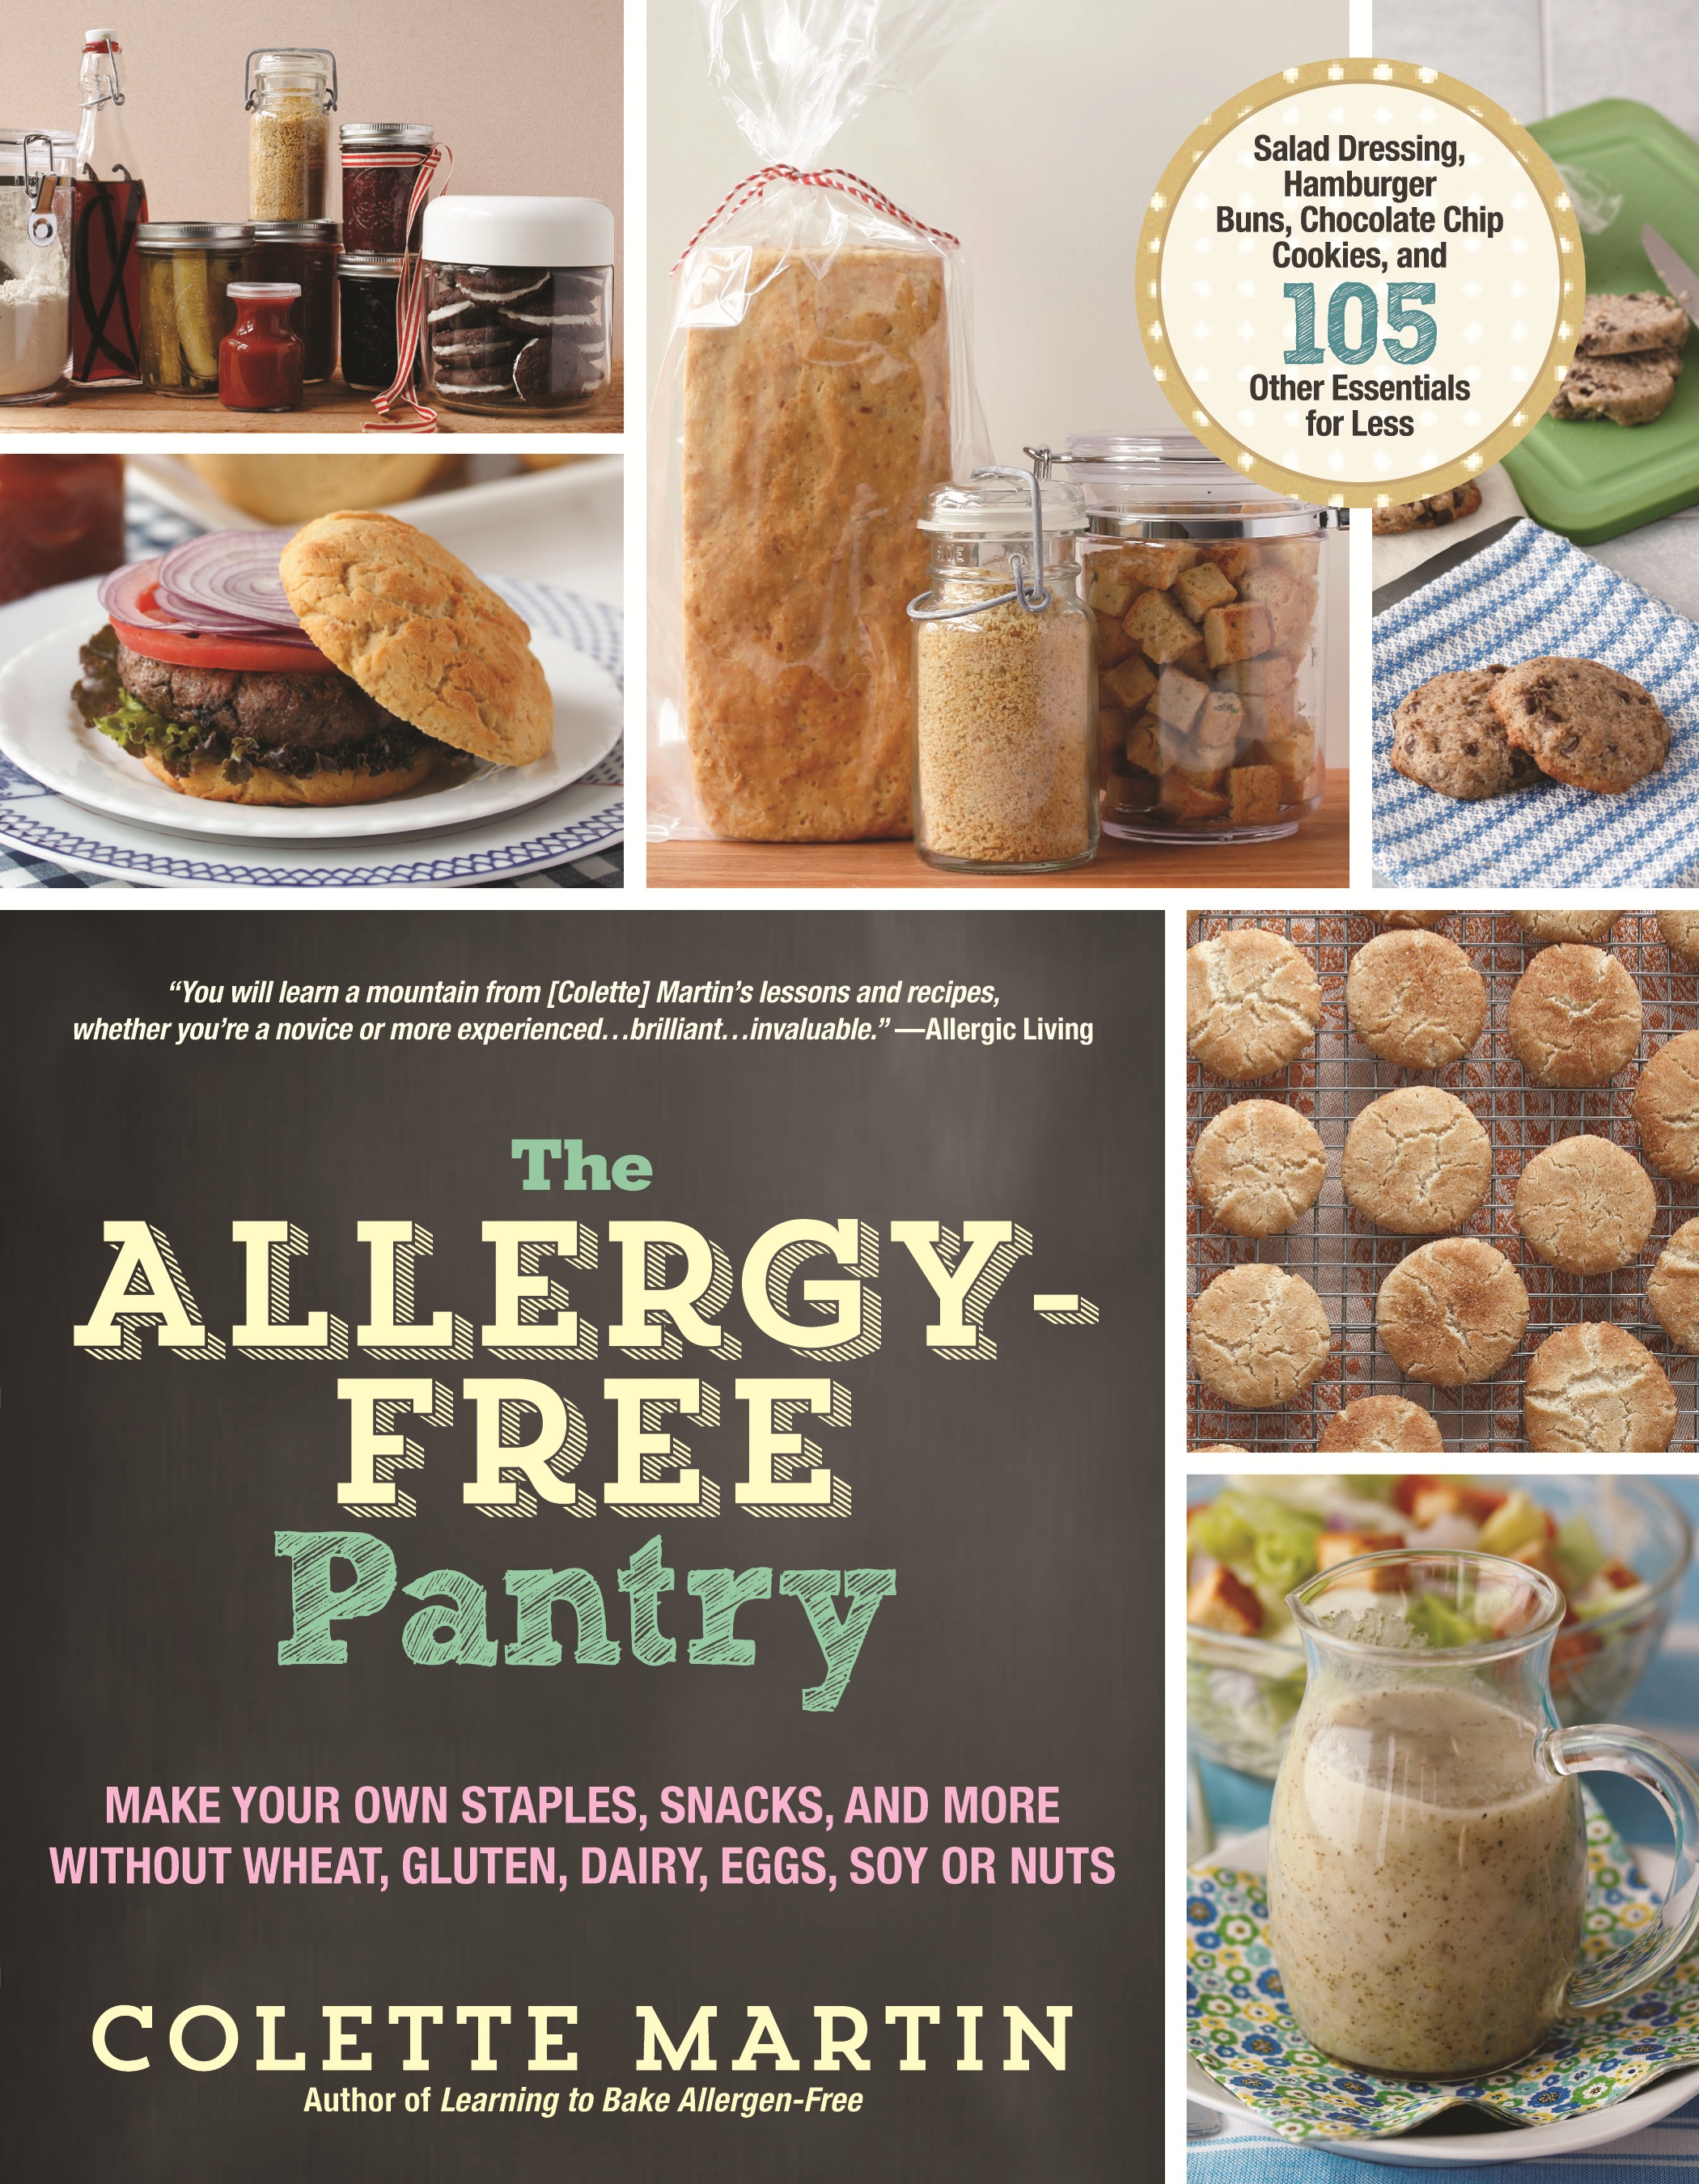 Allergy-friendly pantry staples